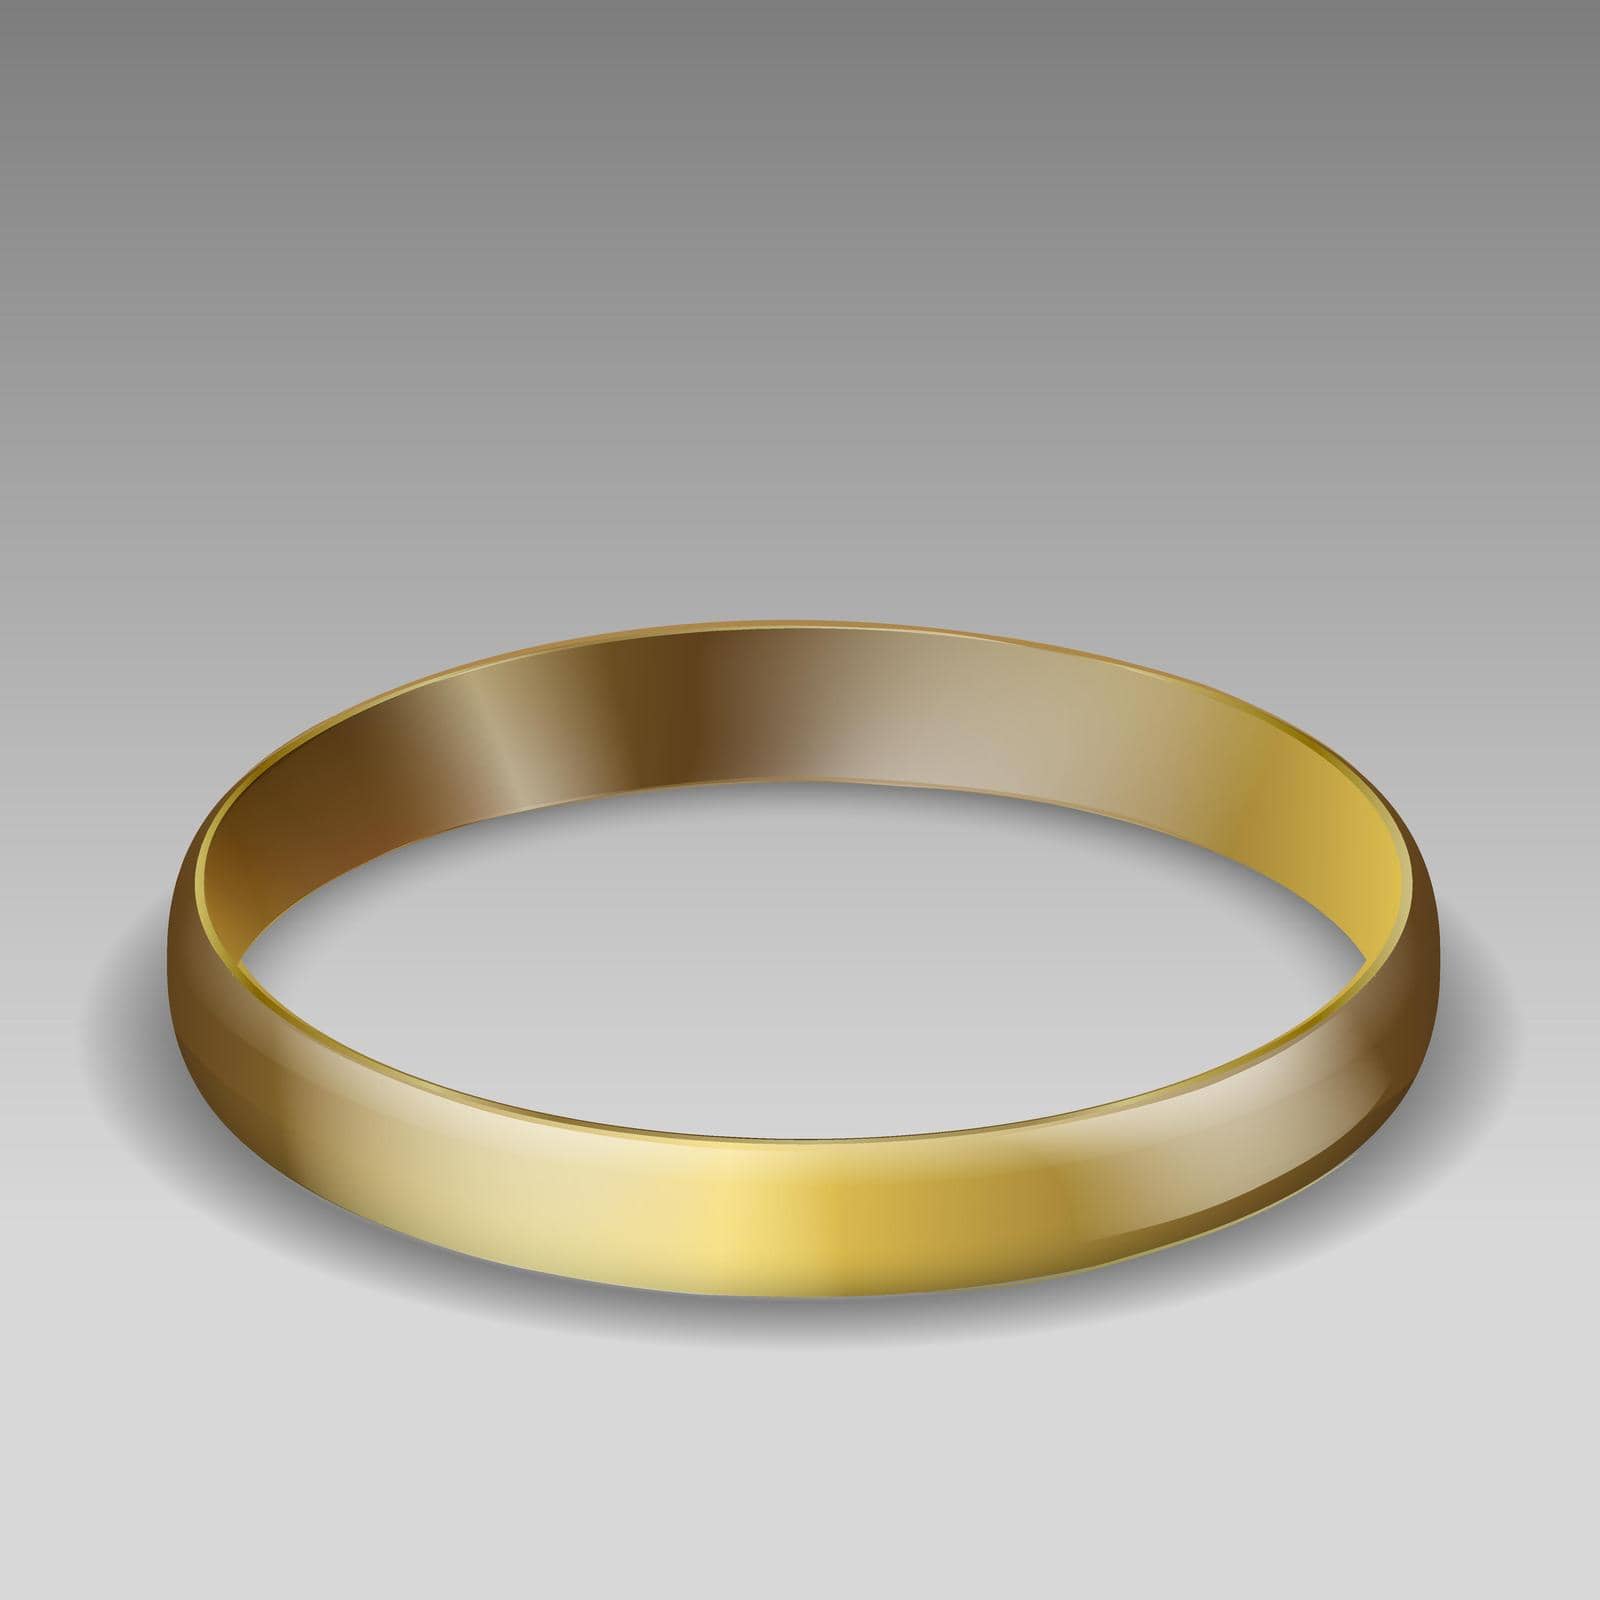 golden wedding ring vector illustration isolated on white background